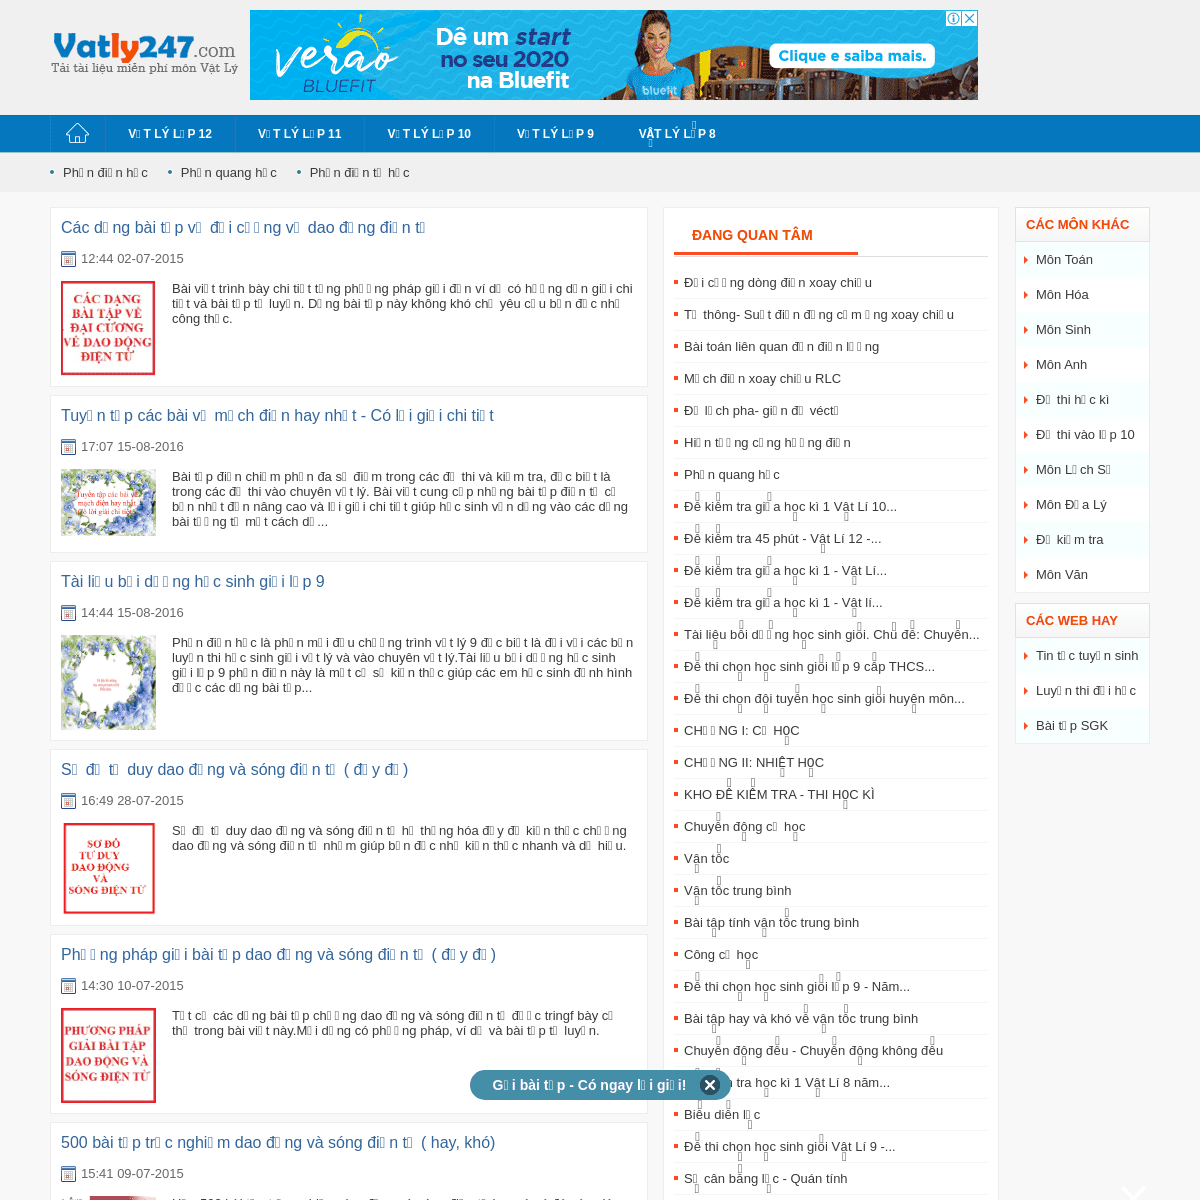 A complete backup of vatly247.com